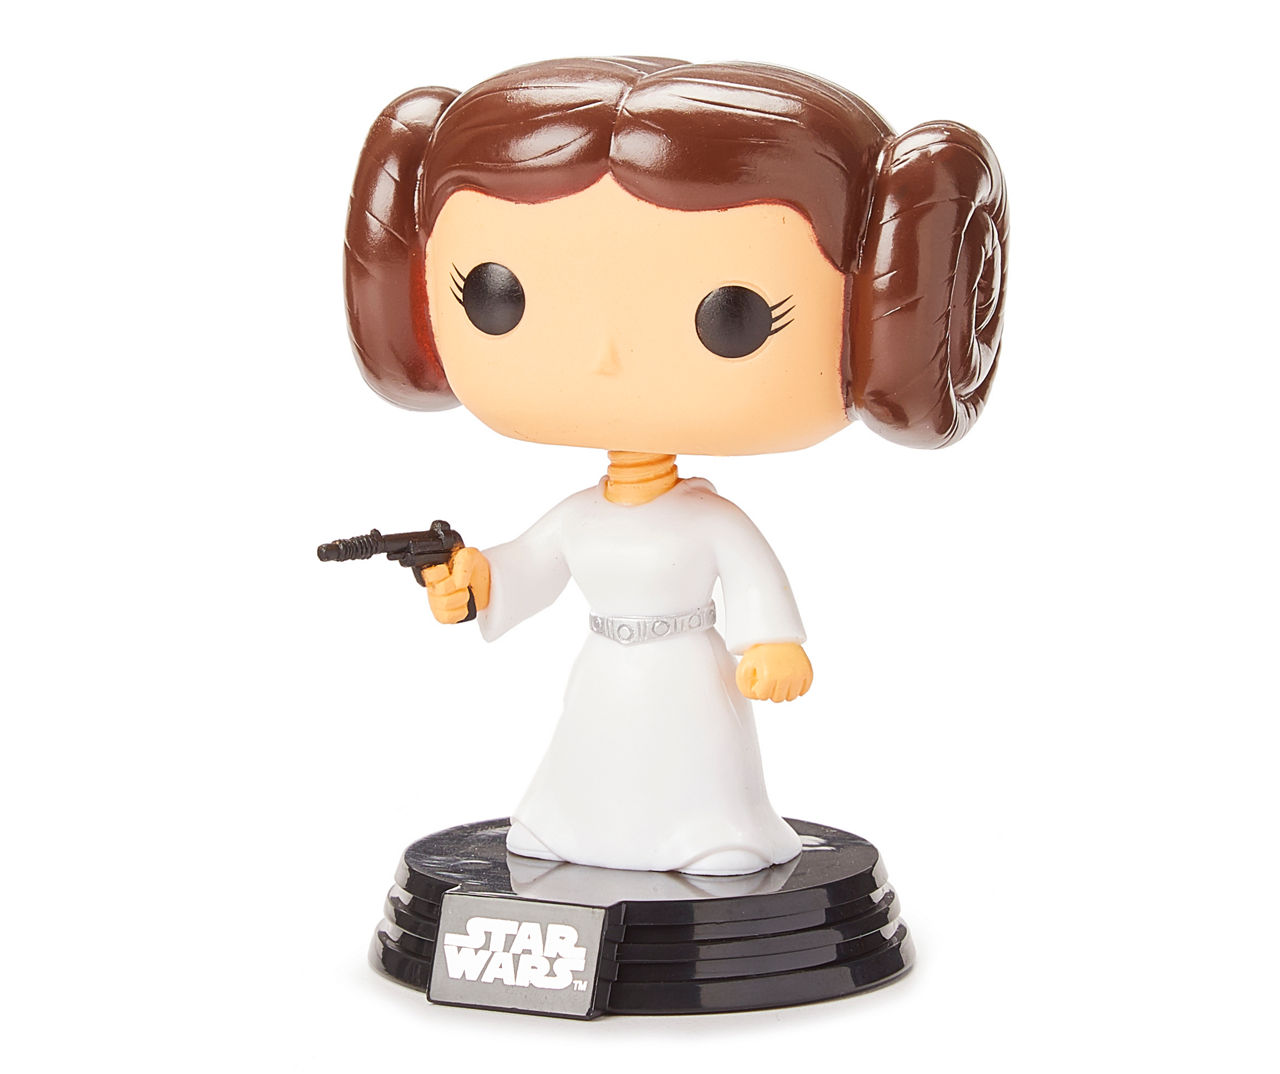 Exert nuance trist Star Wars Princess Leia Pop! Vinyl Bobble-Head Figure | Big Lots